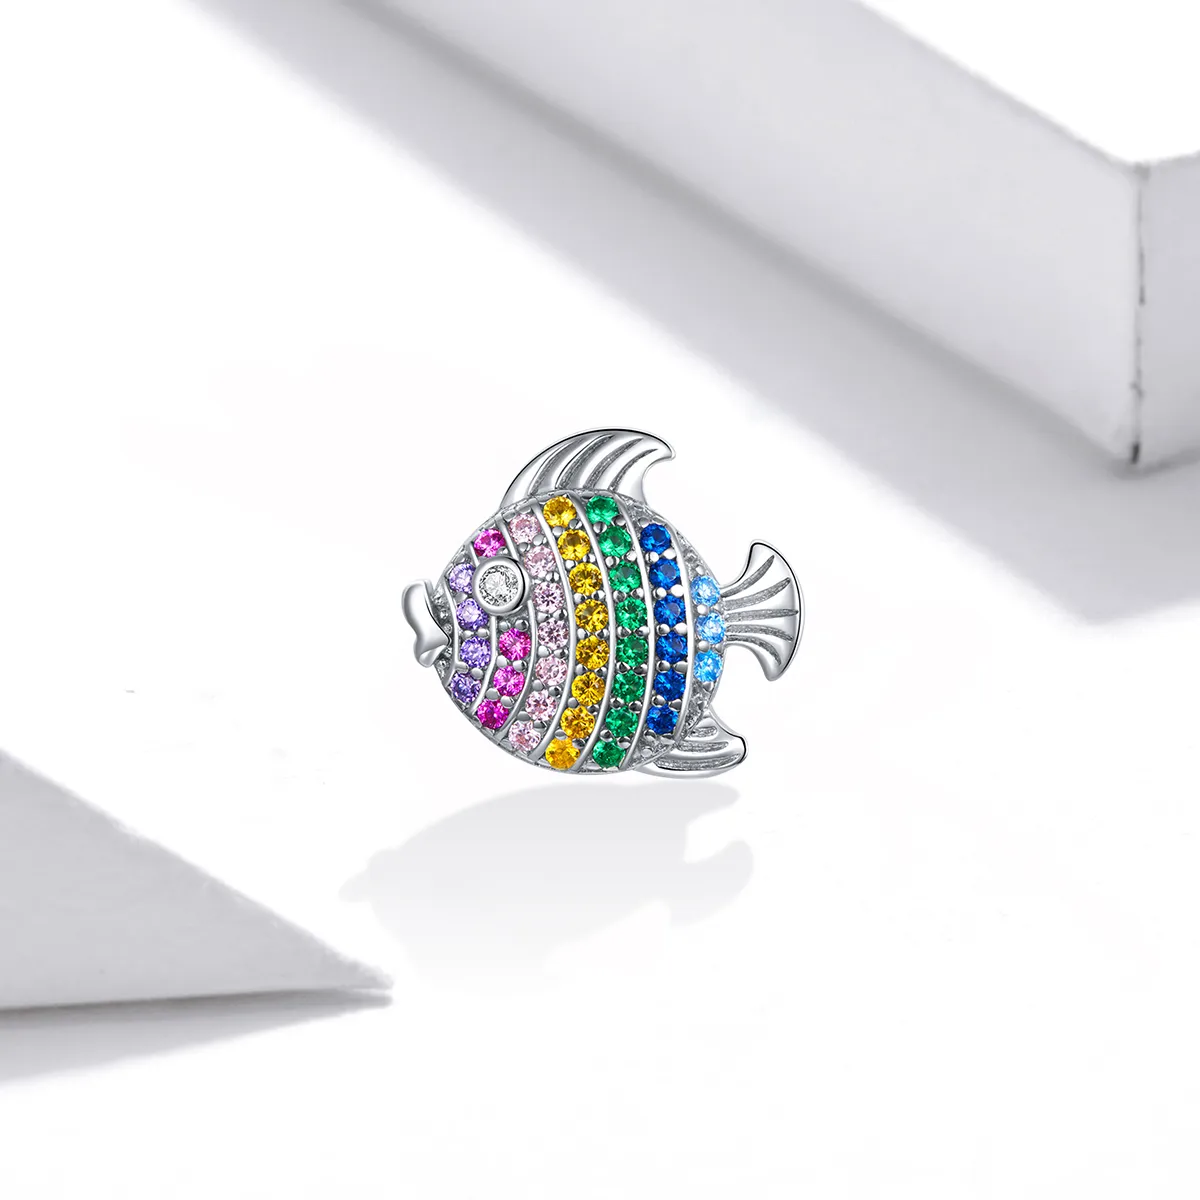 Pandora Style Silver Colorful Fish Charm - SCC1803